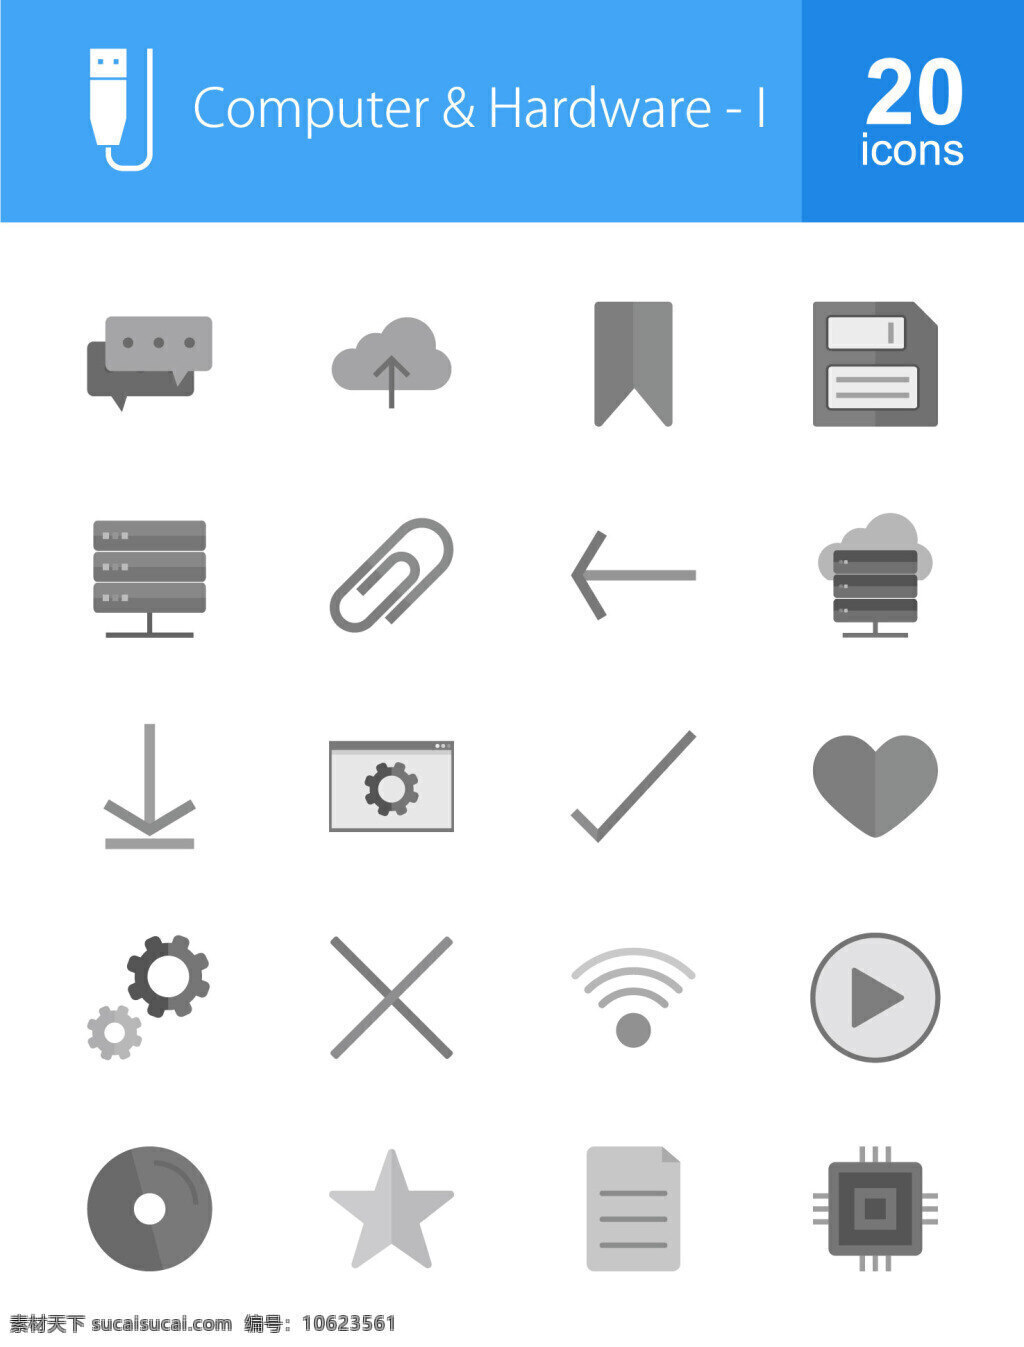 款 灰色 ios 系统 icon icon图标 icon下载 音量 键 下载icon 多彩icon 播放 收藏 返回